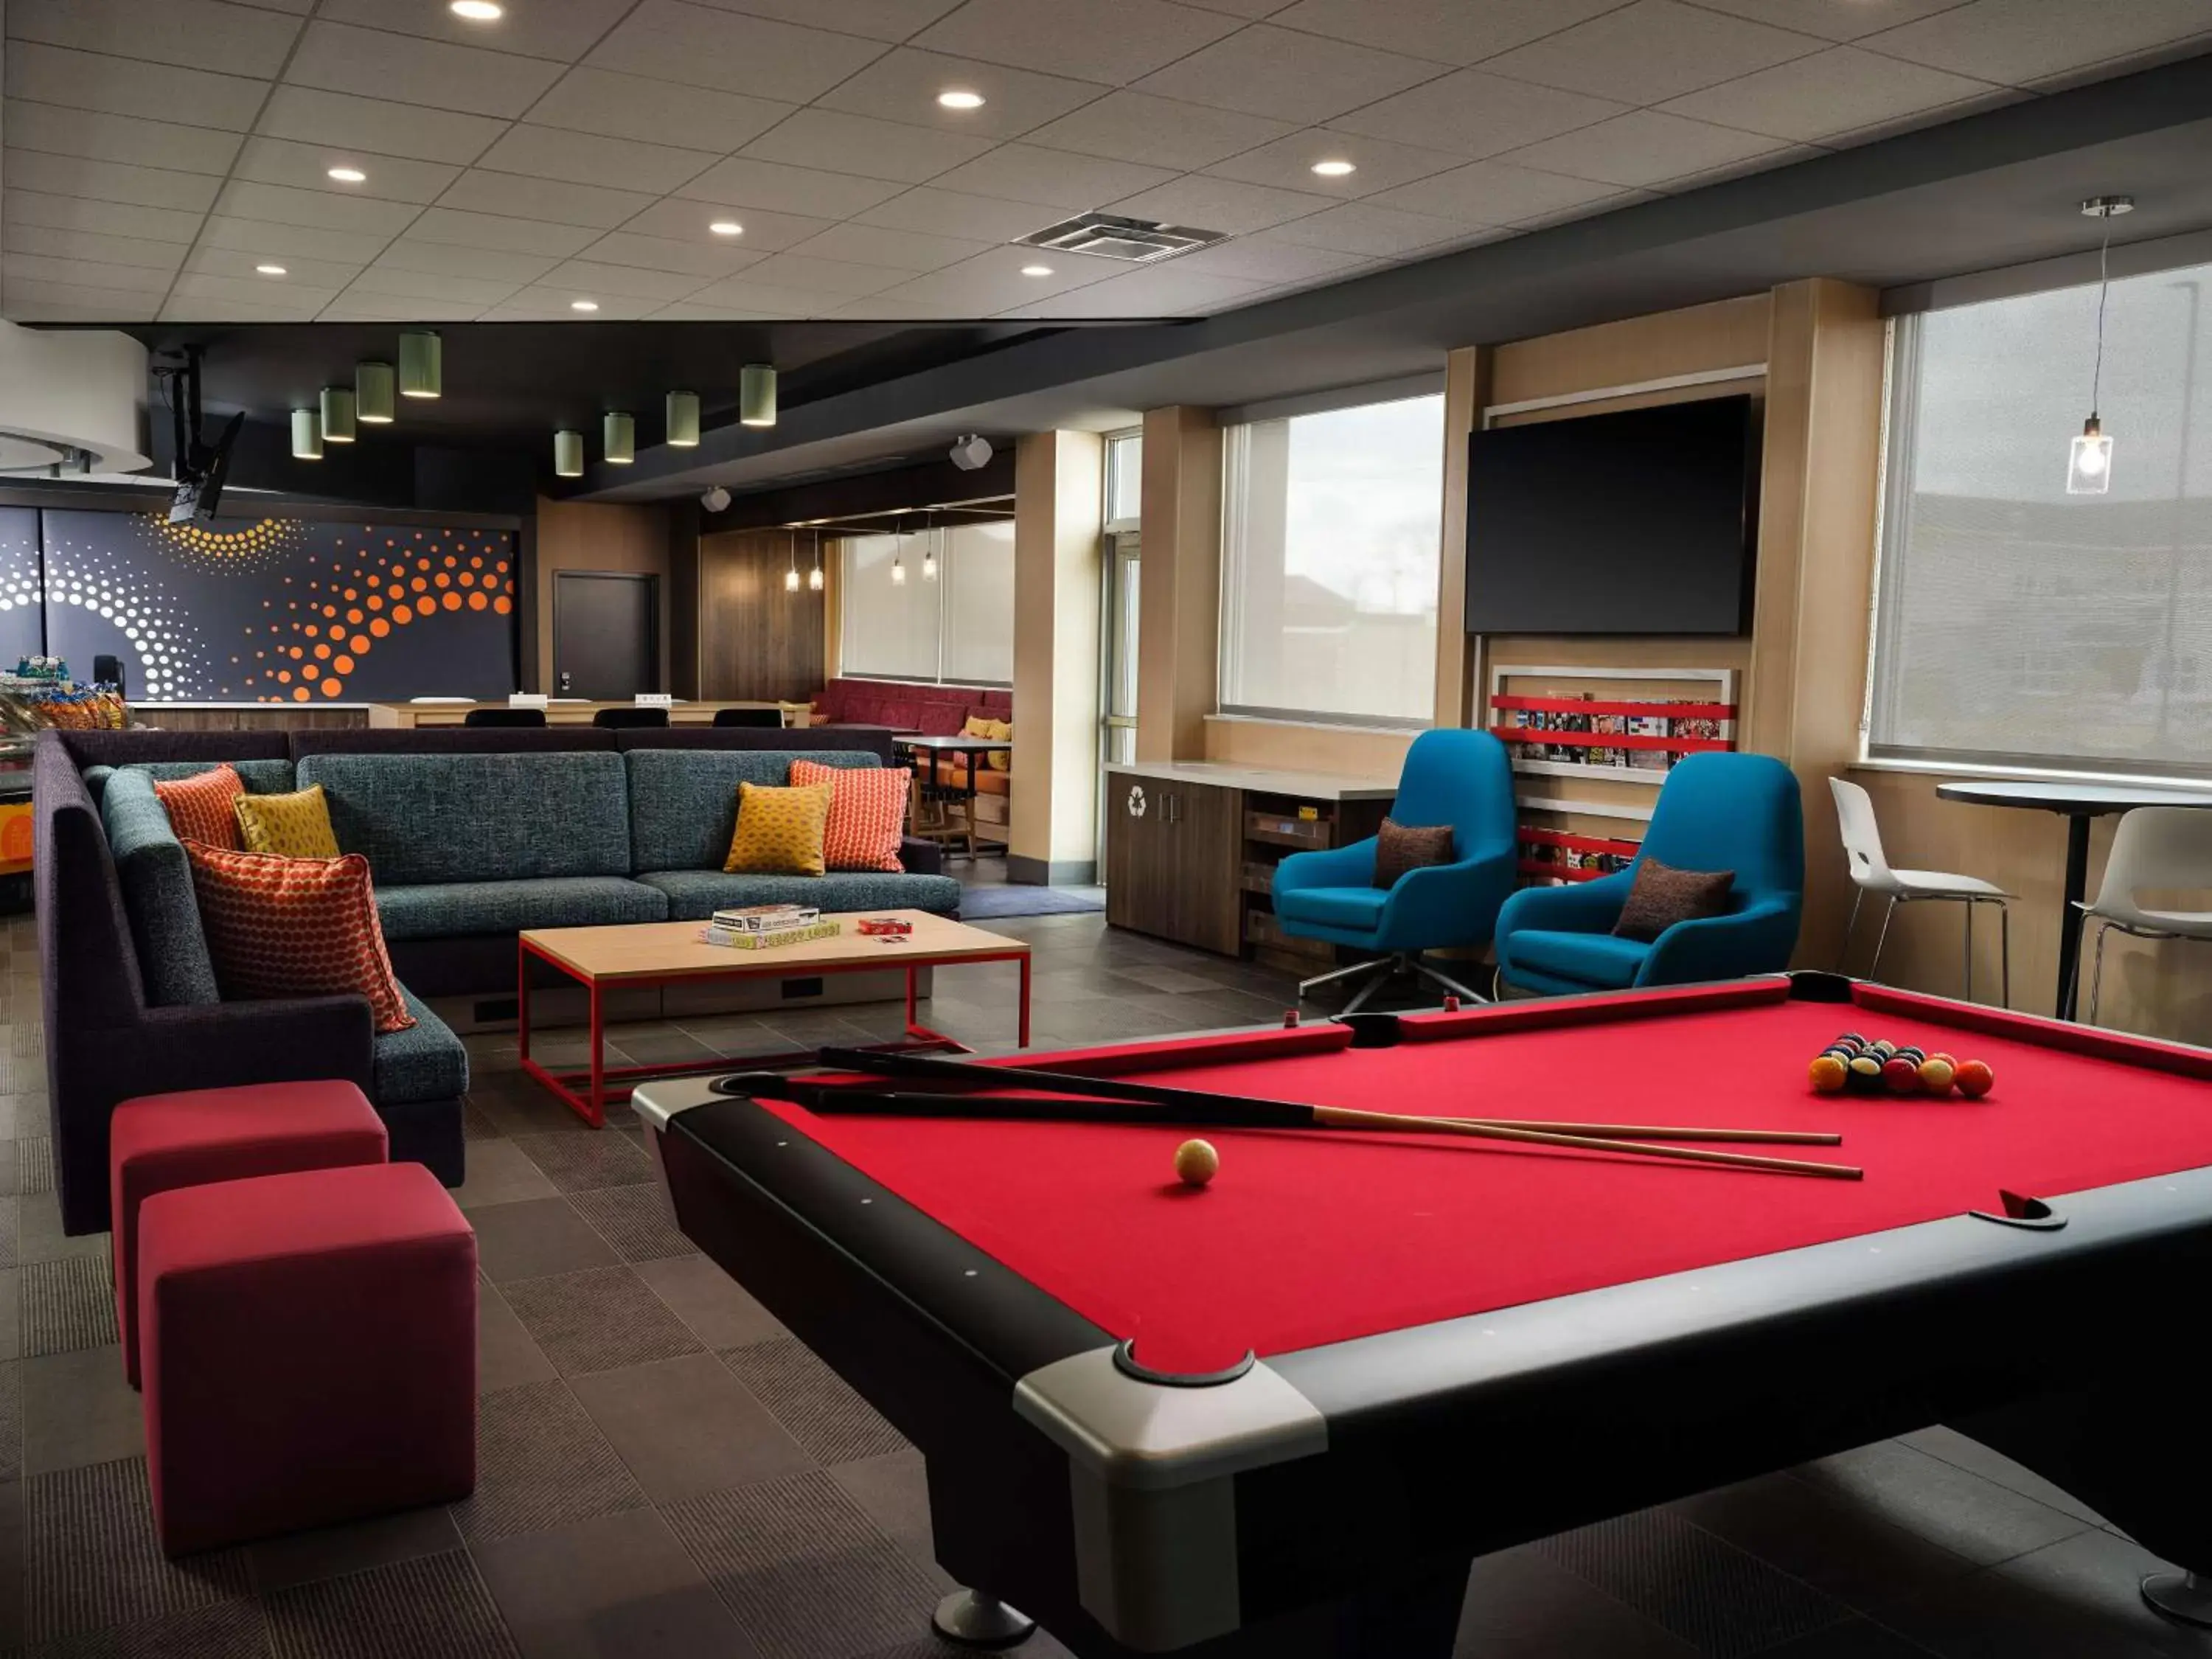 Game Room, Billiards in Tru By Hilton Tupelo, Ms